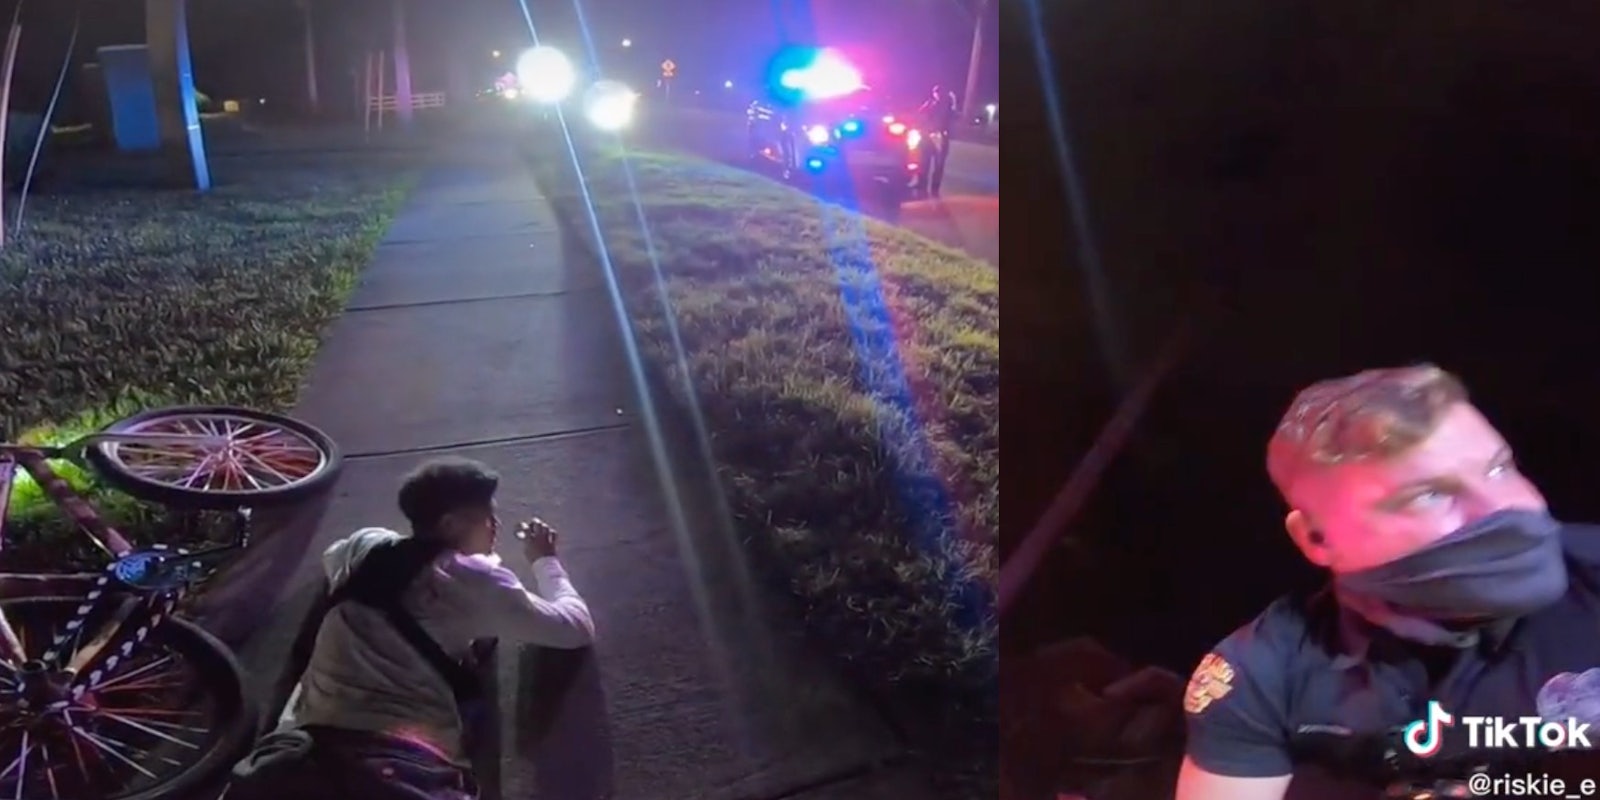 Ian Adams' video showed cops making two Black bikers 'crawl' toward them